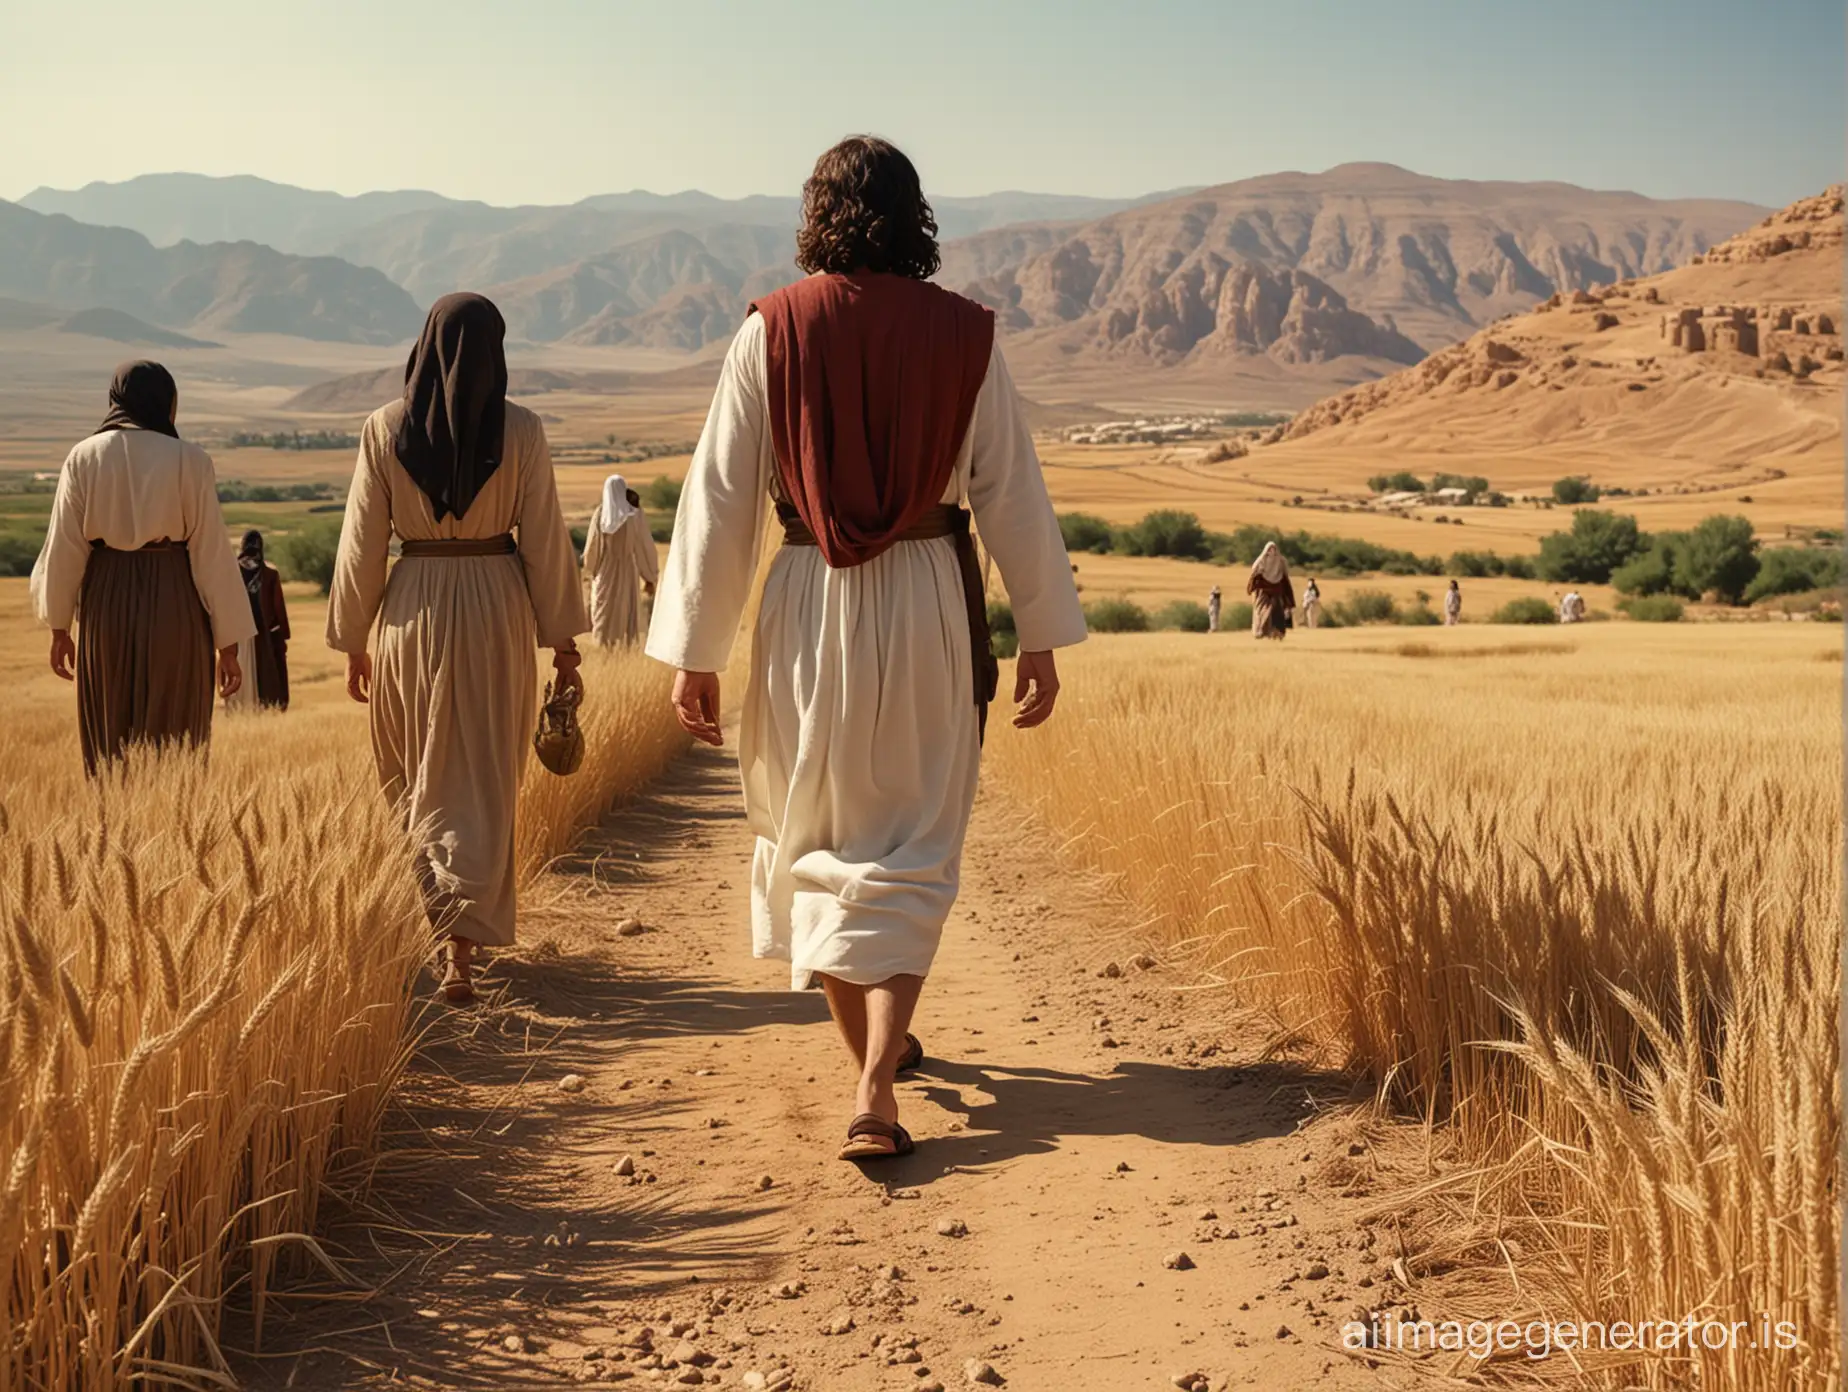 Biblical-Scene-Jesus-Christ-Walking-in-a-Wheat-Field-with-Three-Women-in-Ancient-Palestine